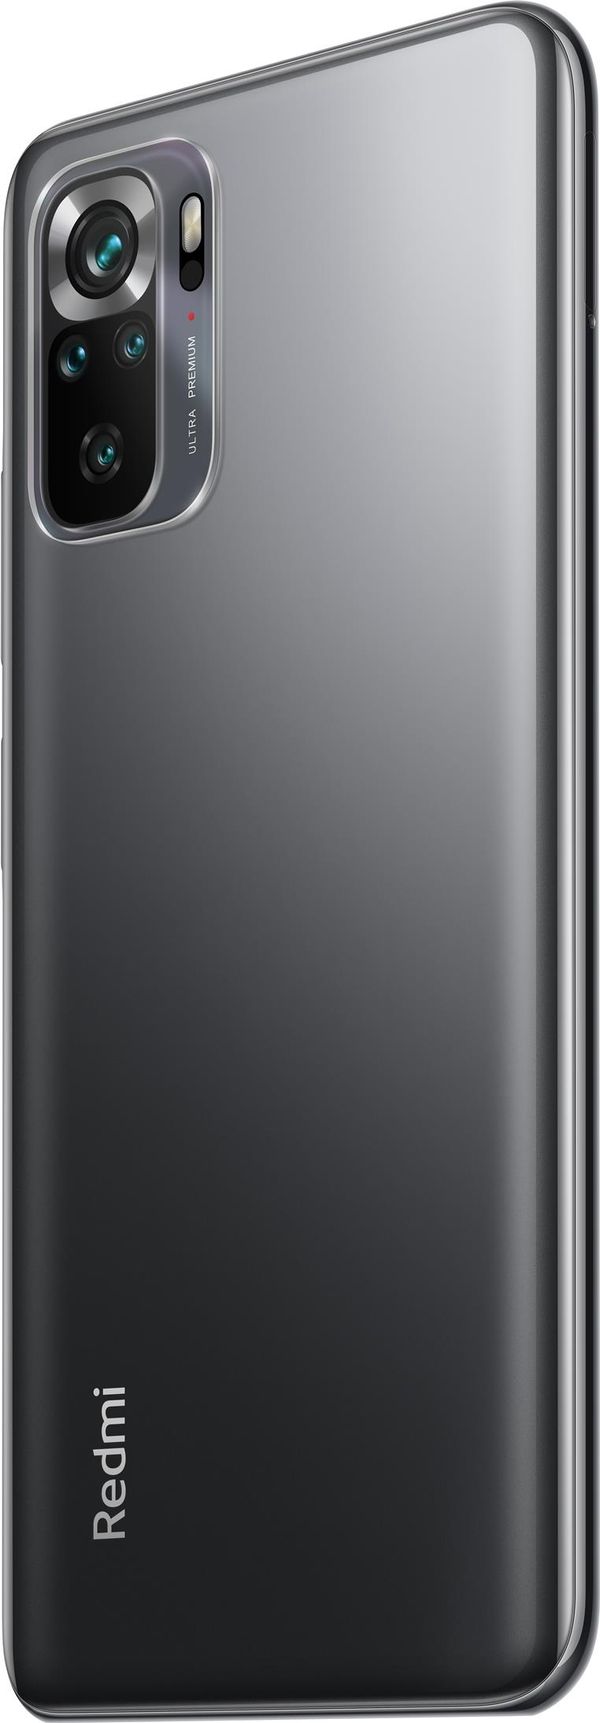 RE-951K7BN90021-PQ smartphone reacondicionado xiaomi redmi note 10s onyx gray 6gb ram 64gb rom grado a